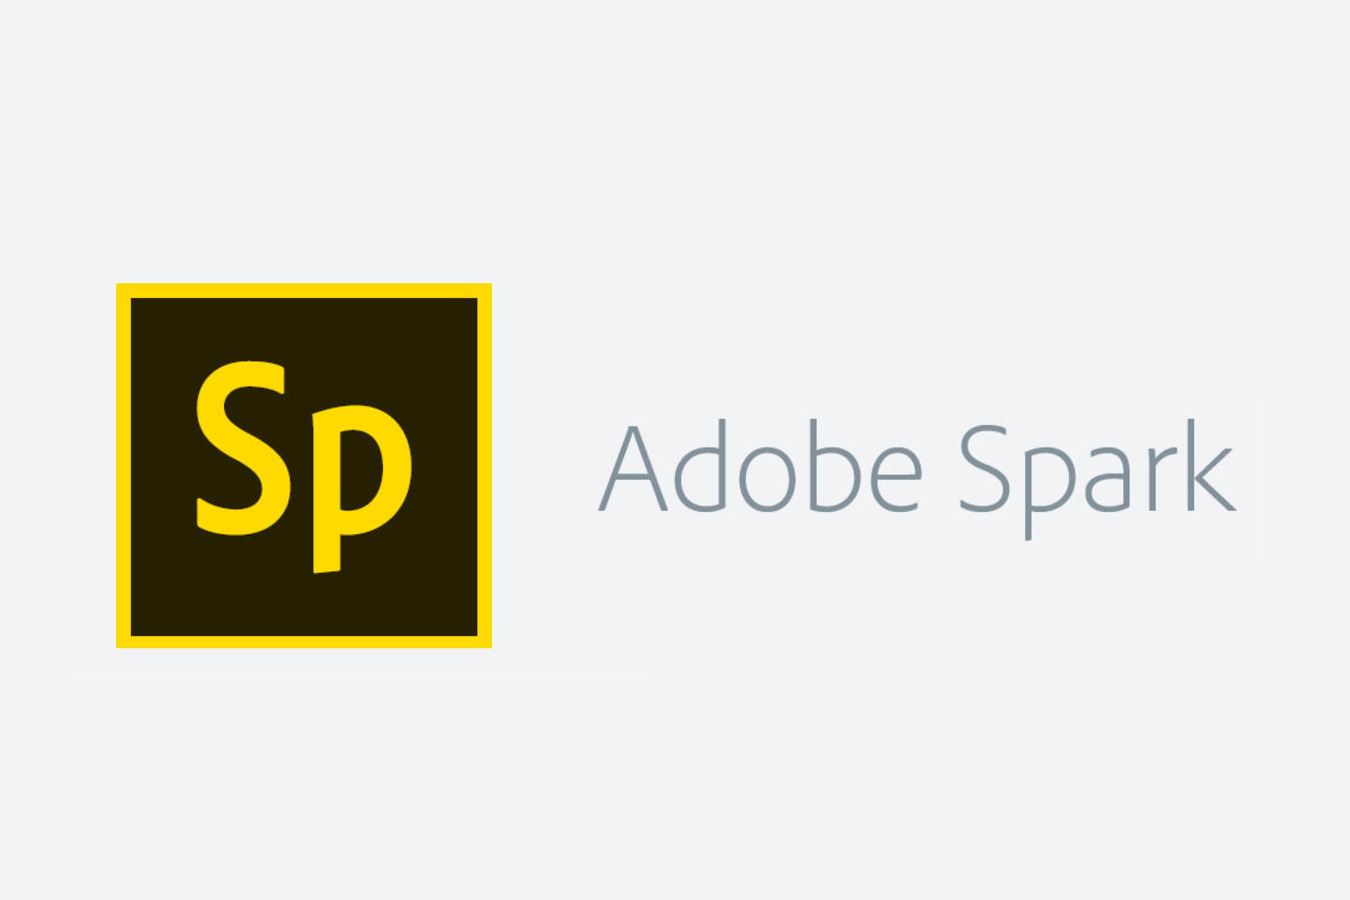 Sp Adobe Spark (logo and text)